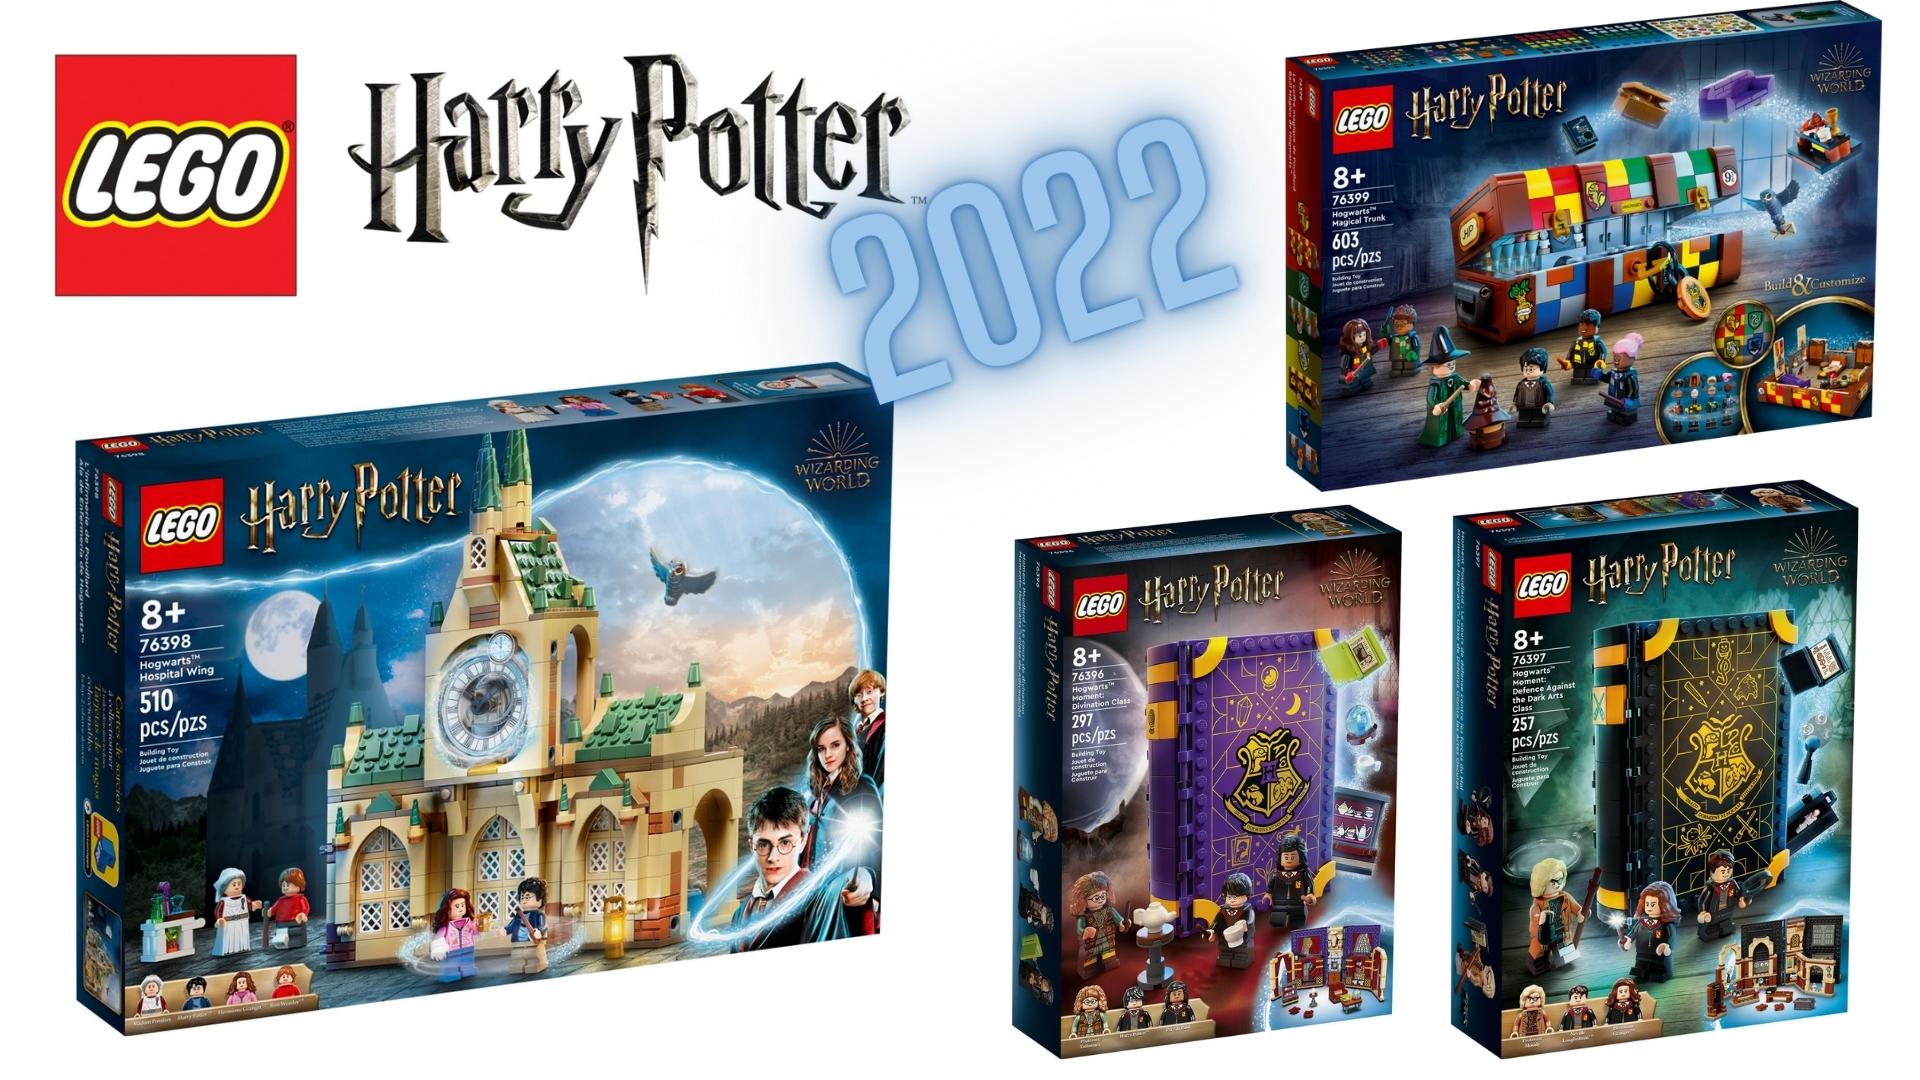 March 2022 LEGO Harry Potter sets revealed! - Jay's Brick Blog